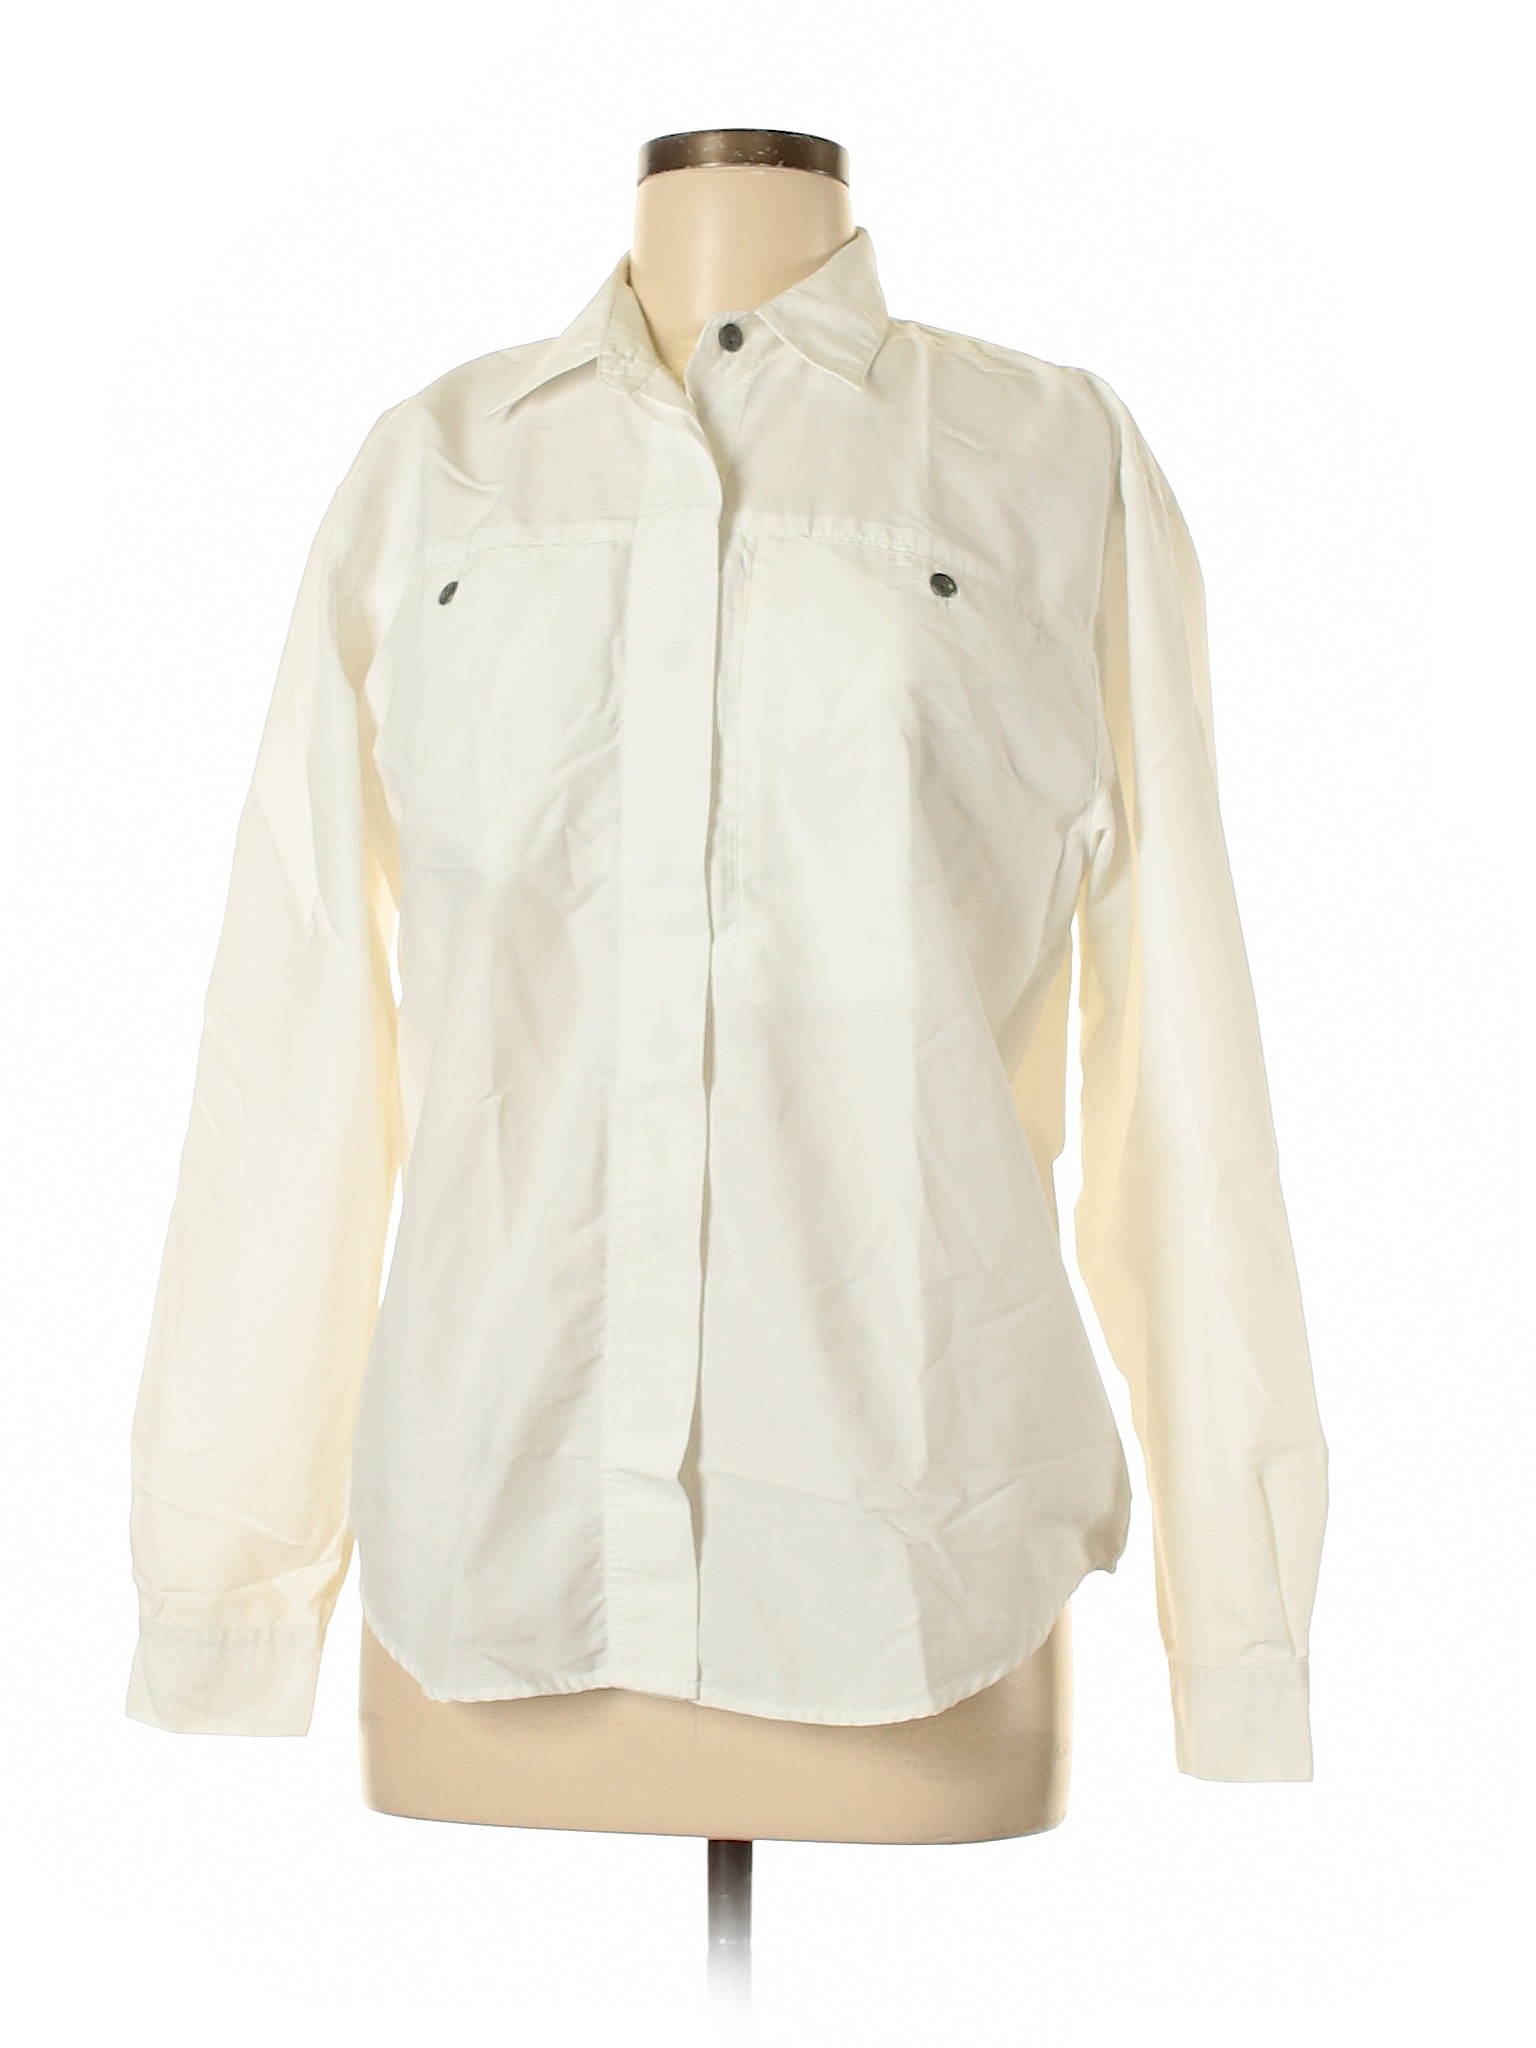 Travelsmith Women White Long Sleeve Button Down Shirt M | eBay